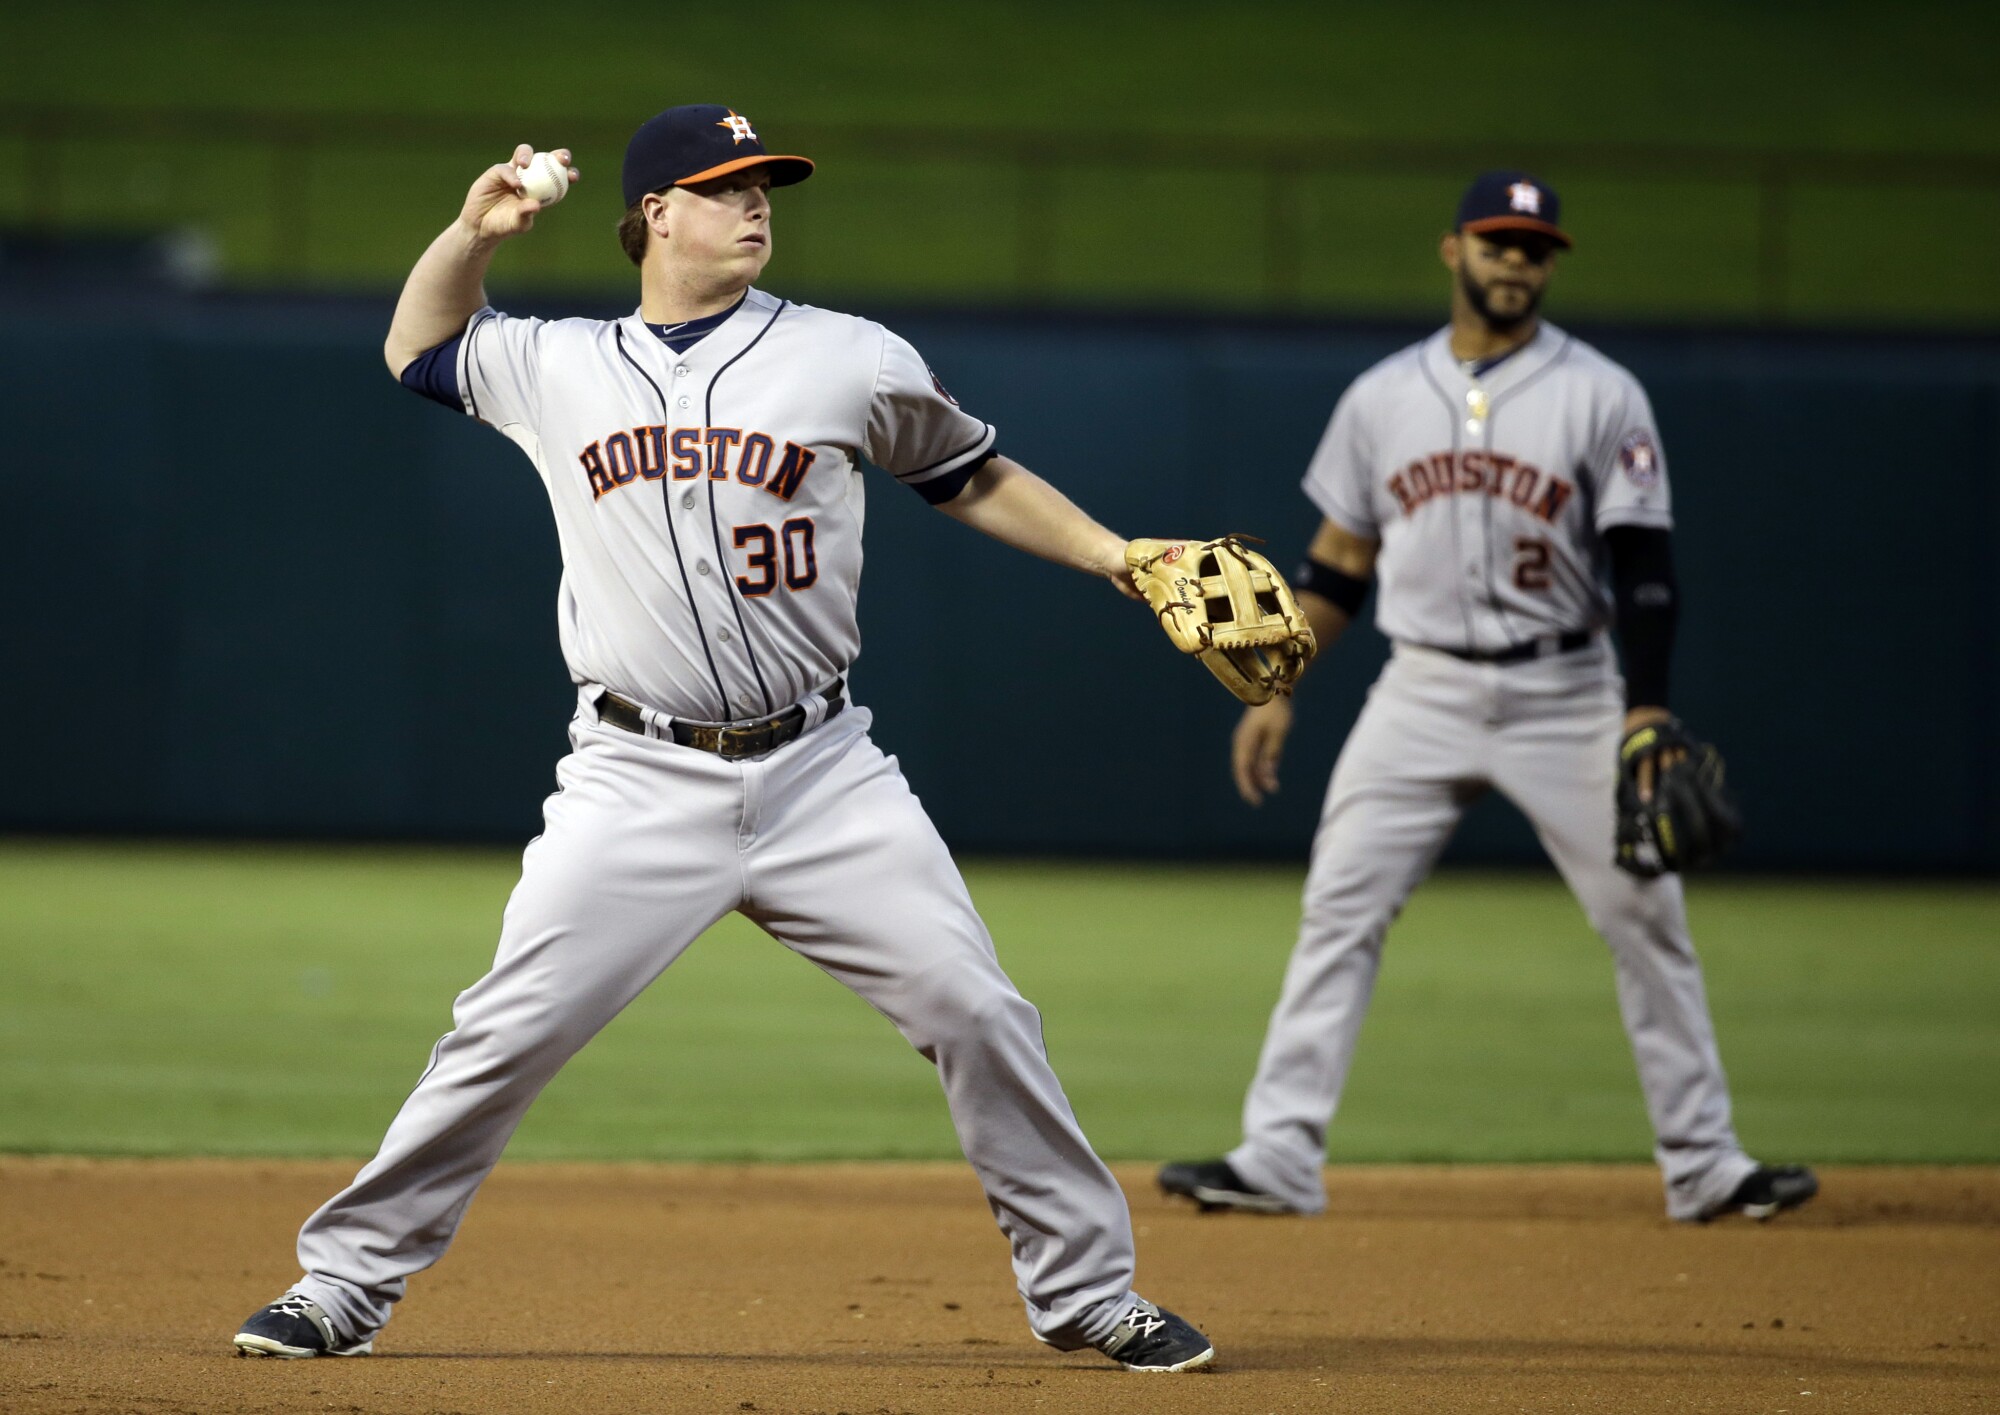 Houston Astros third baseman Matt Dominguez throws to first against the Texas Rangers in September 2014.